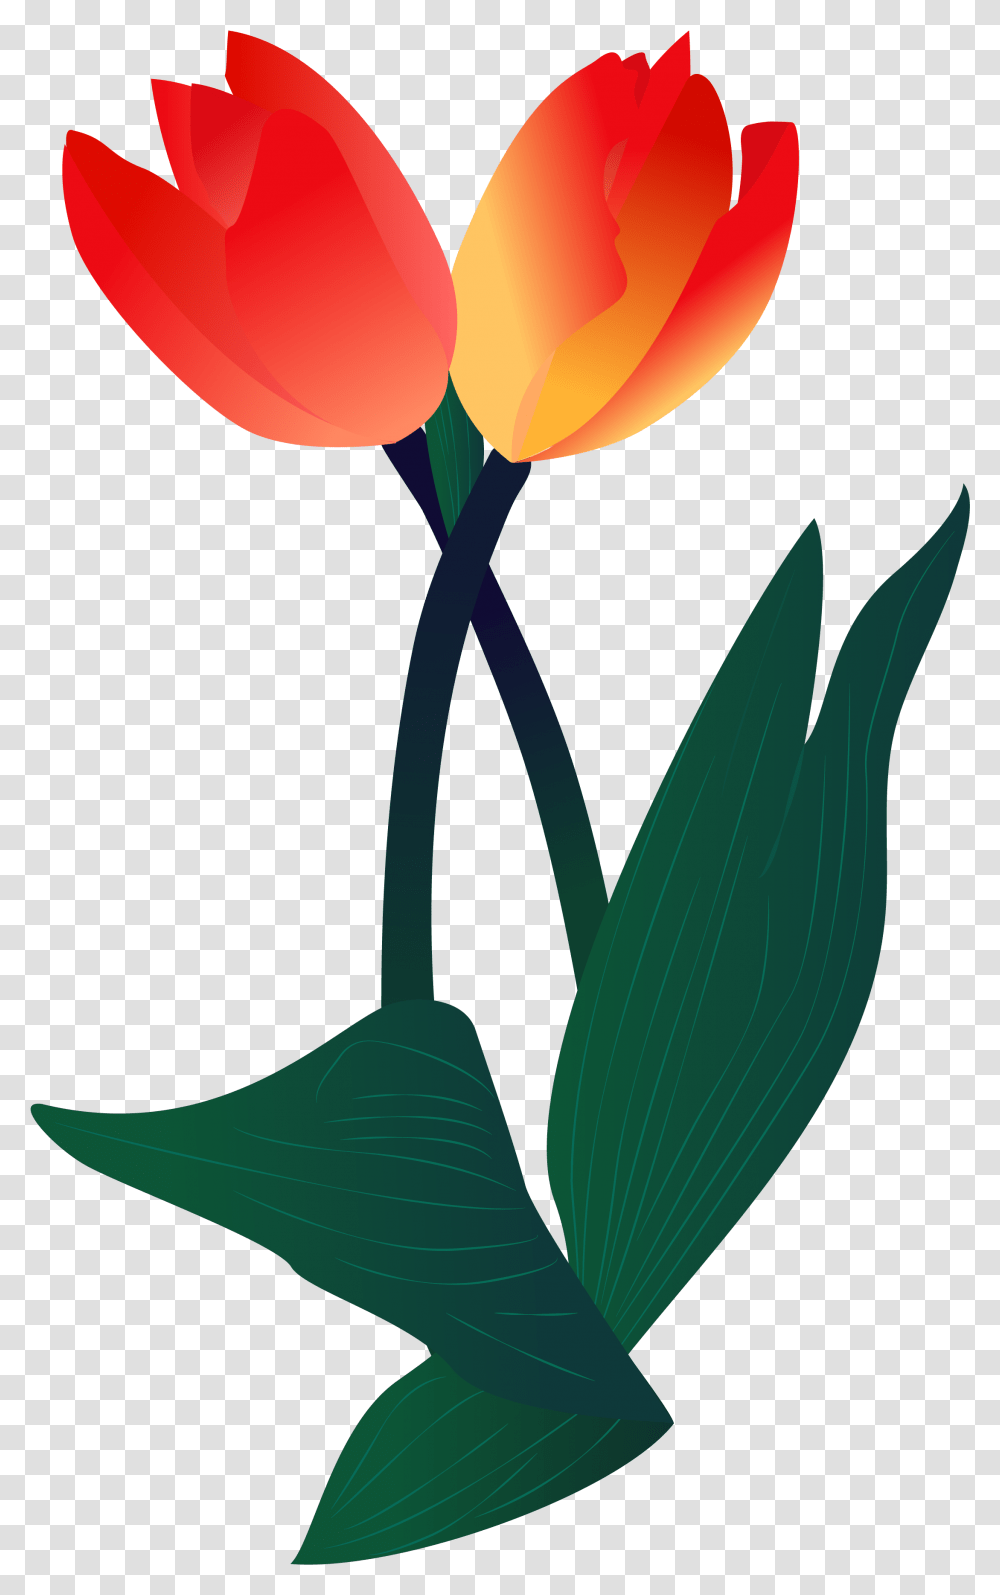 Plant Illustration Flower And Vector Image Sprenger's Hd Tulip Flower, Blossom Transparent Png